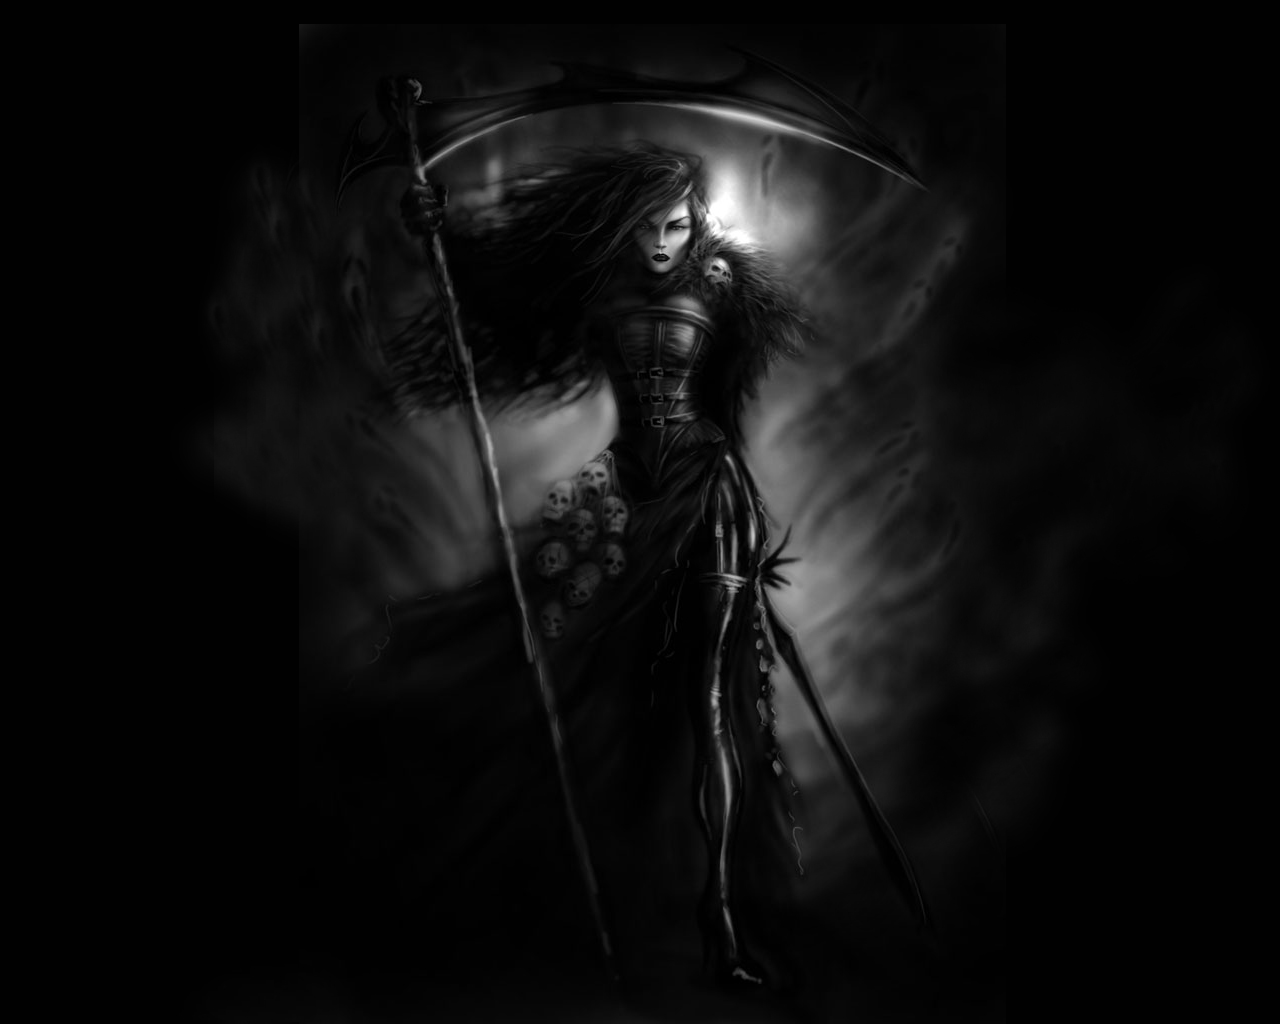 Cool Backgrounds dark, grim reaper Occult